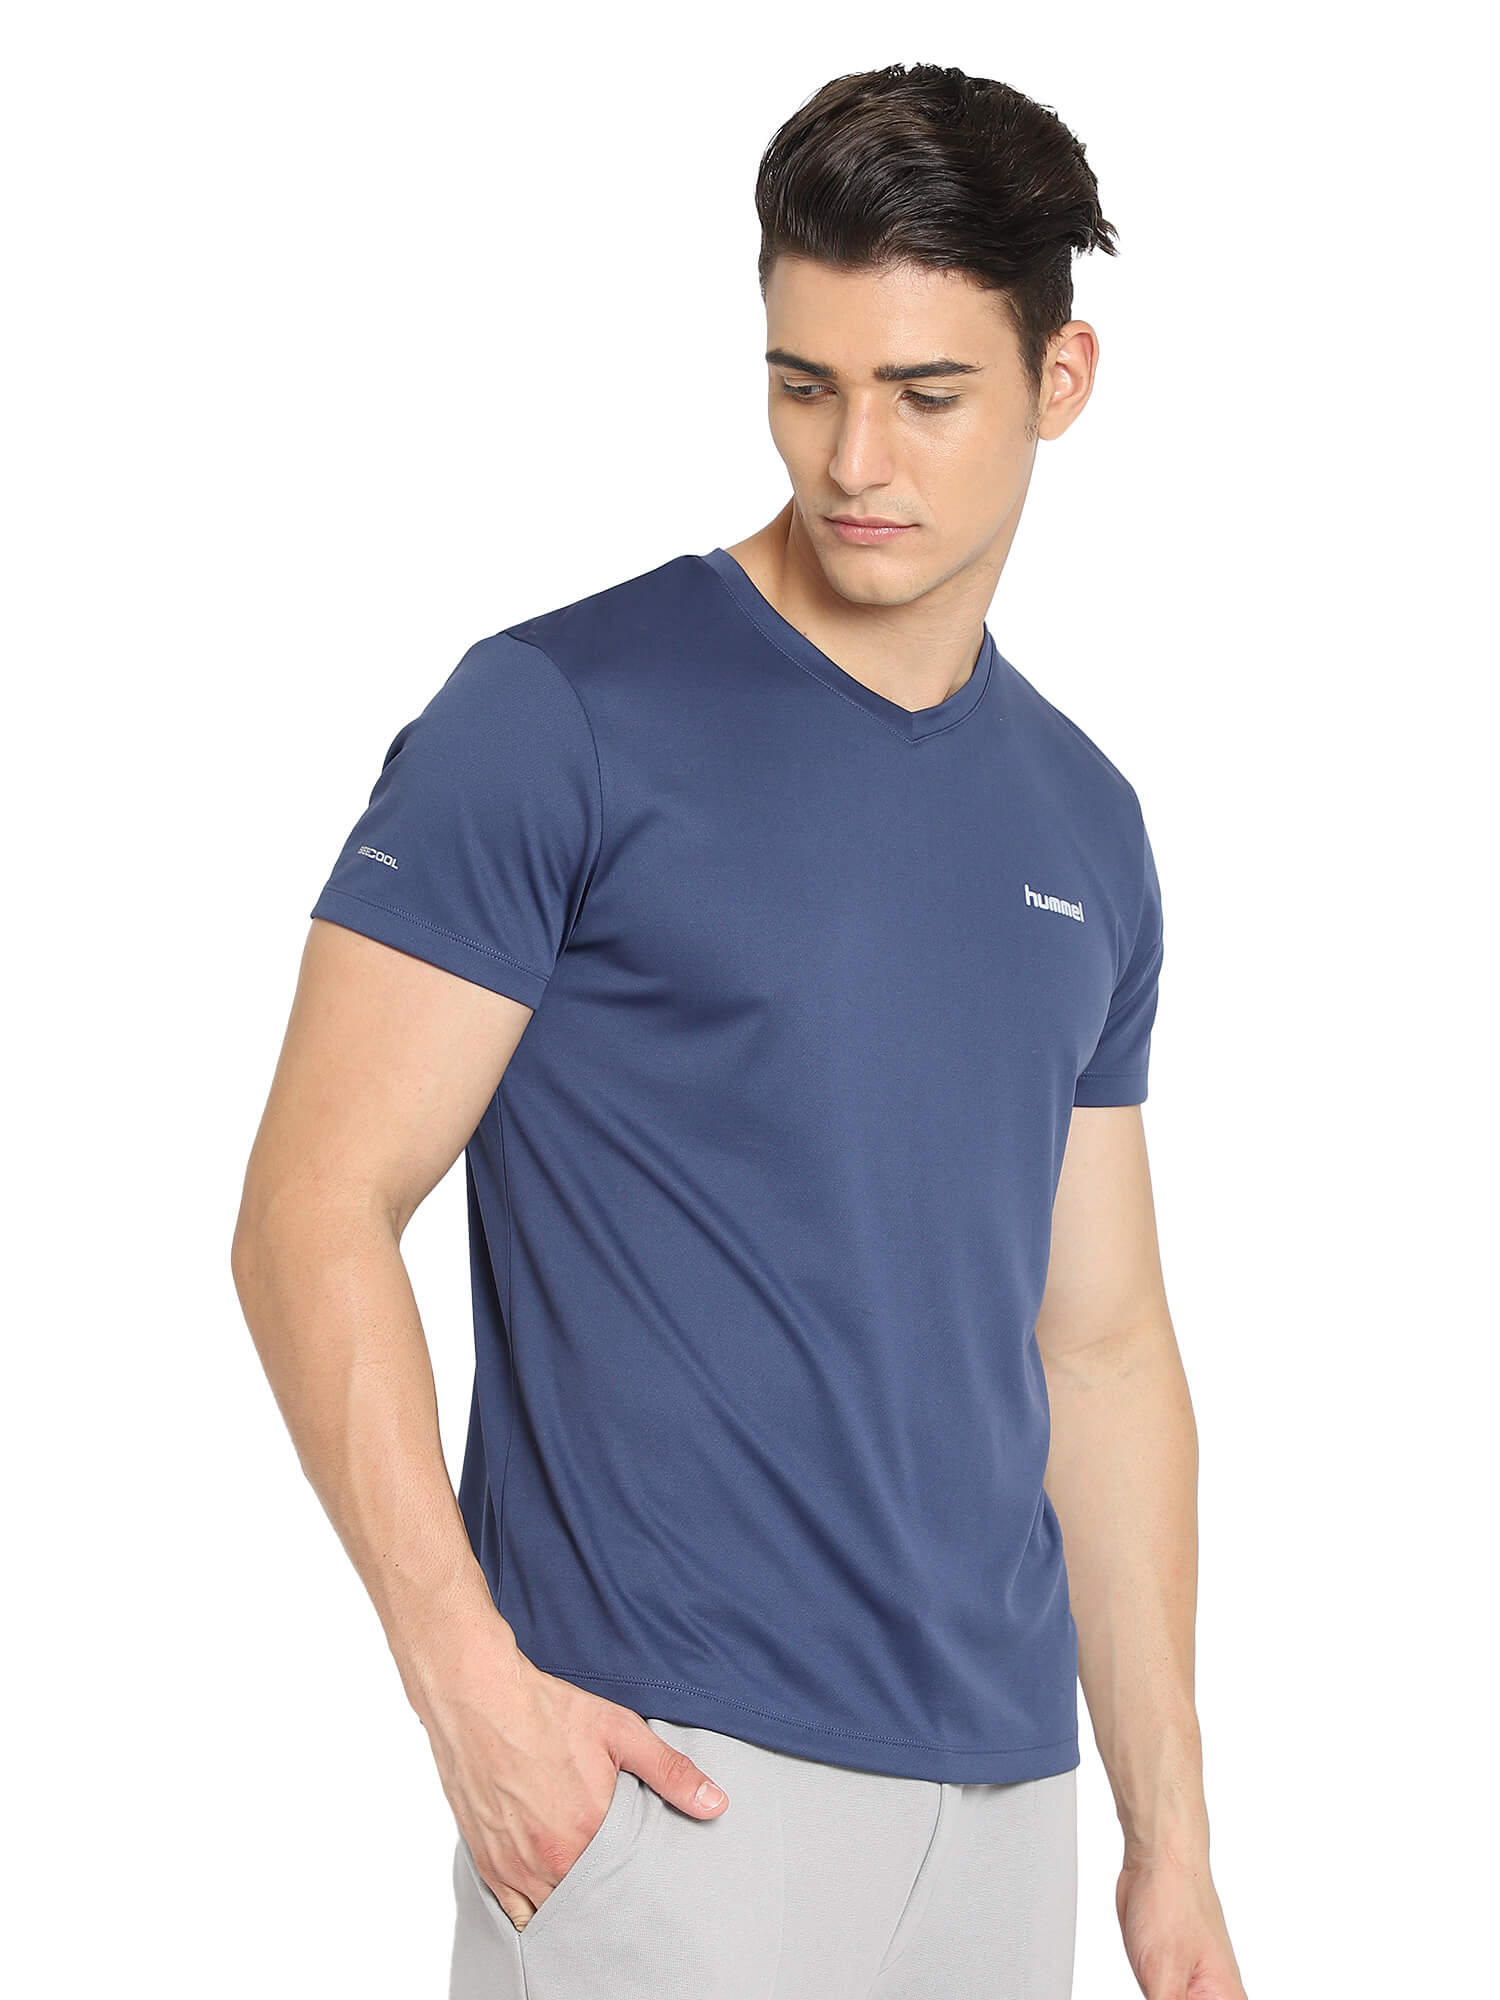 Amero Blue T-Shirts for Men